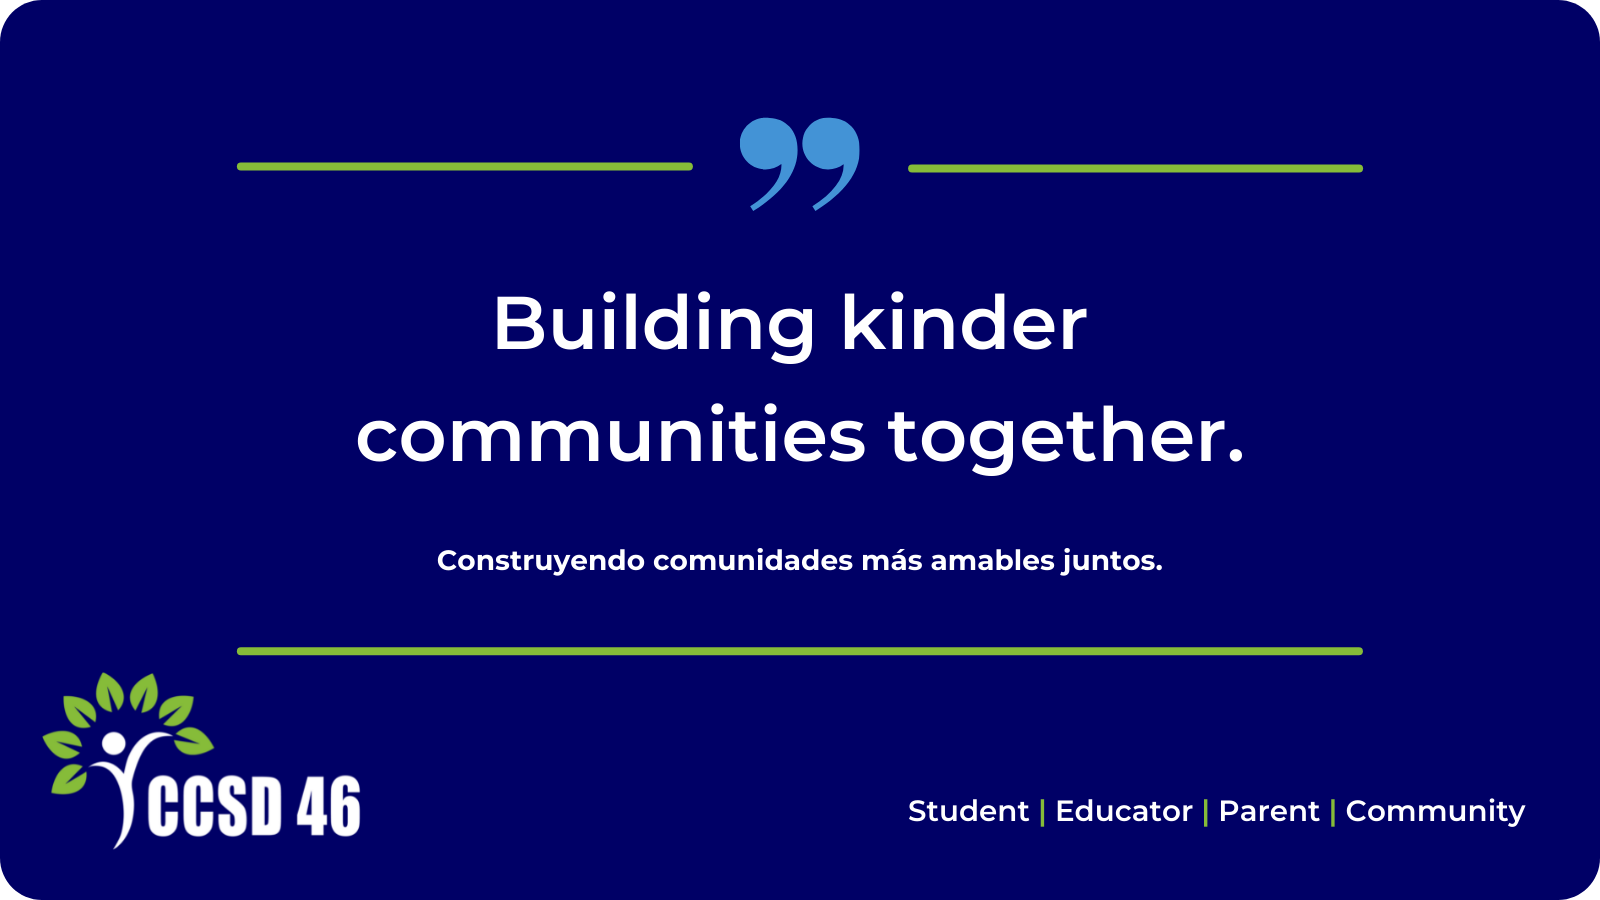 Building kinder communities together - graphic element